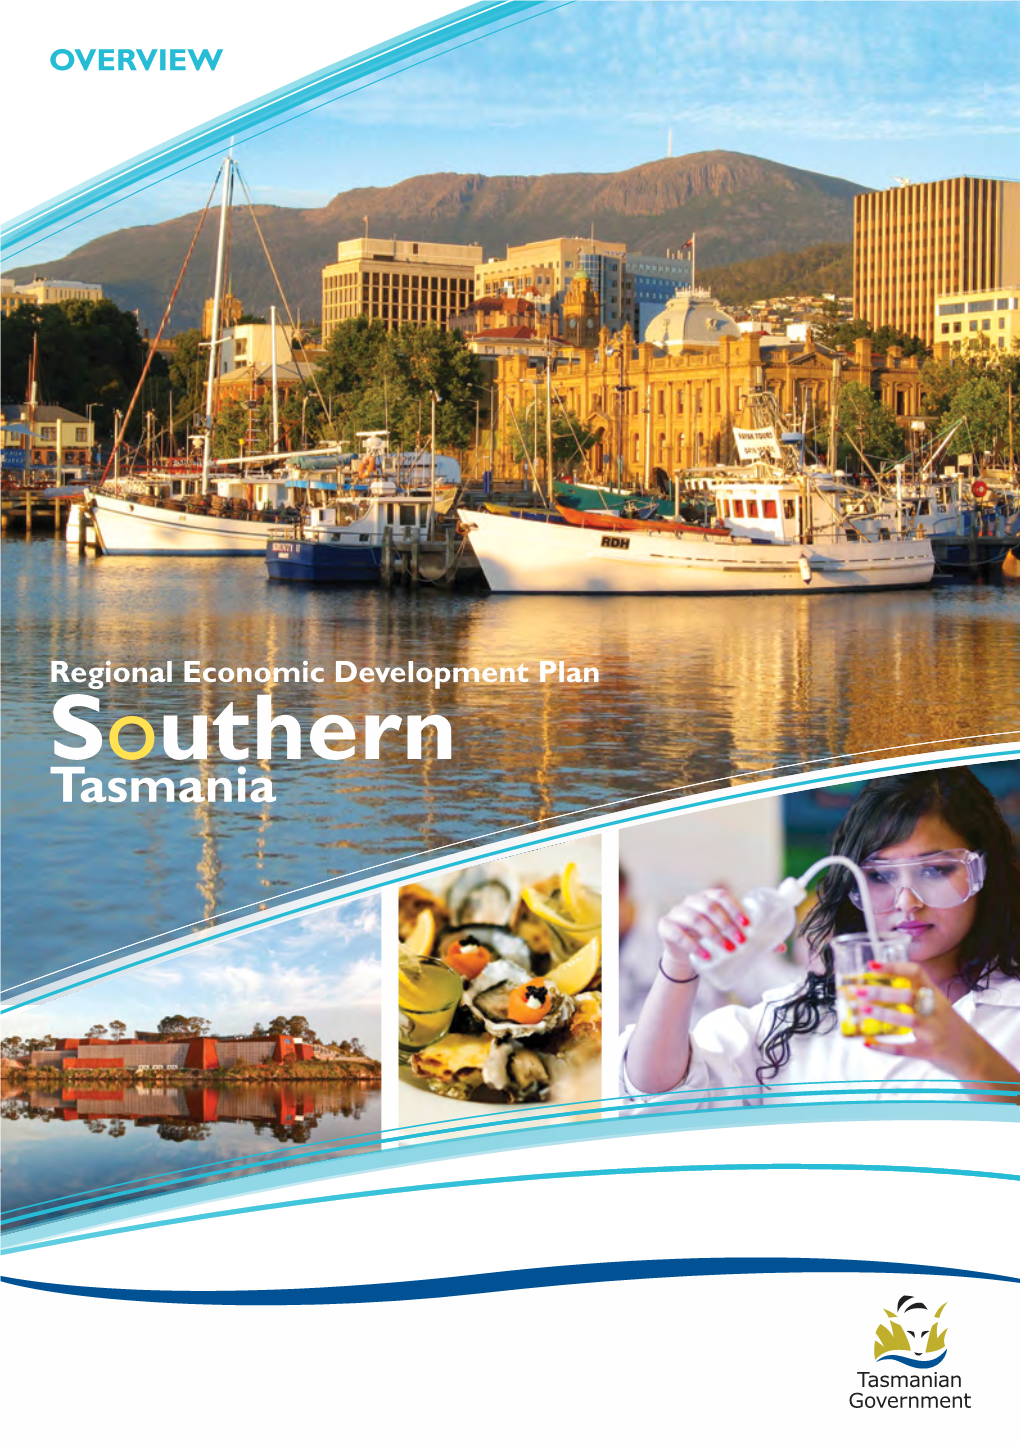 Southern Tasmania Ii Overview of the Regional Economic Development Plan: Southern Tasmania CONTENTS